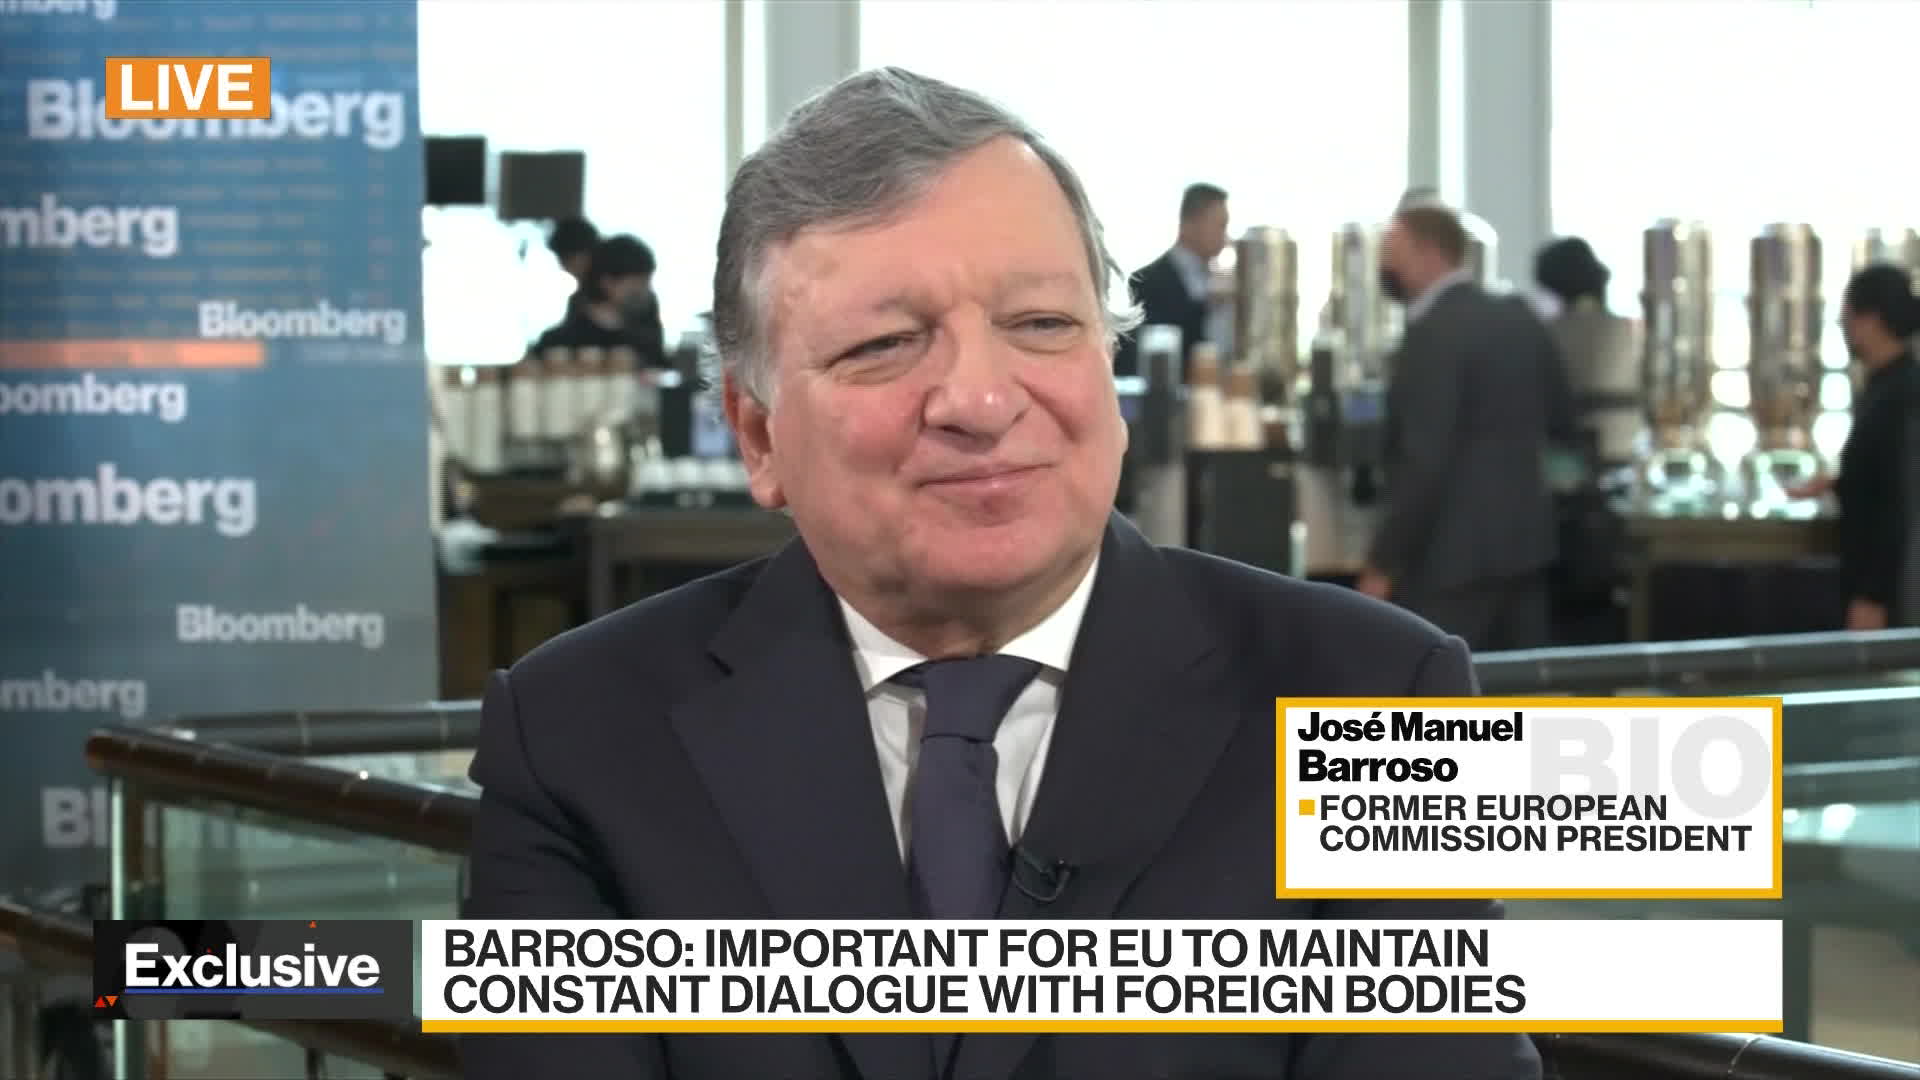 Jose Manuel Barroso  Biography, European Commission, & Facts